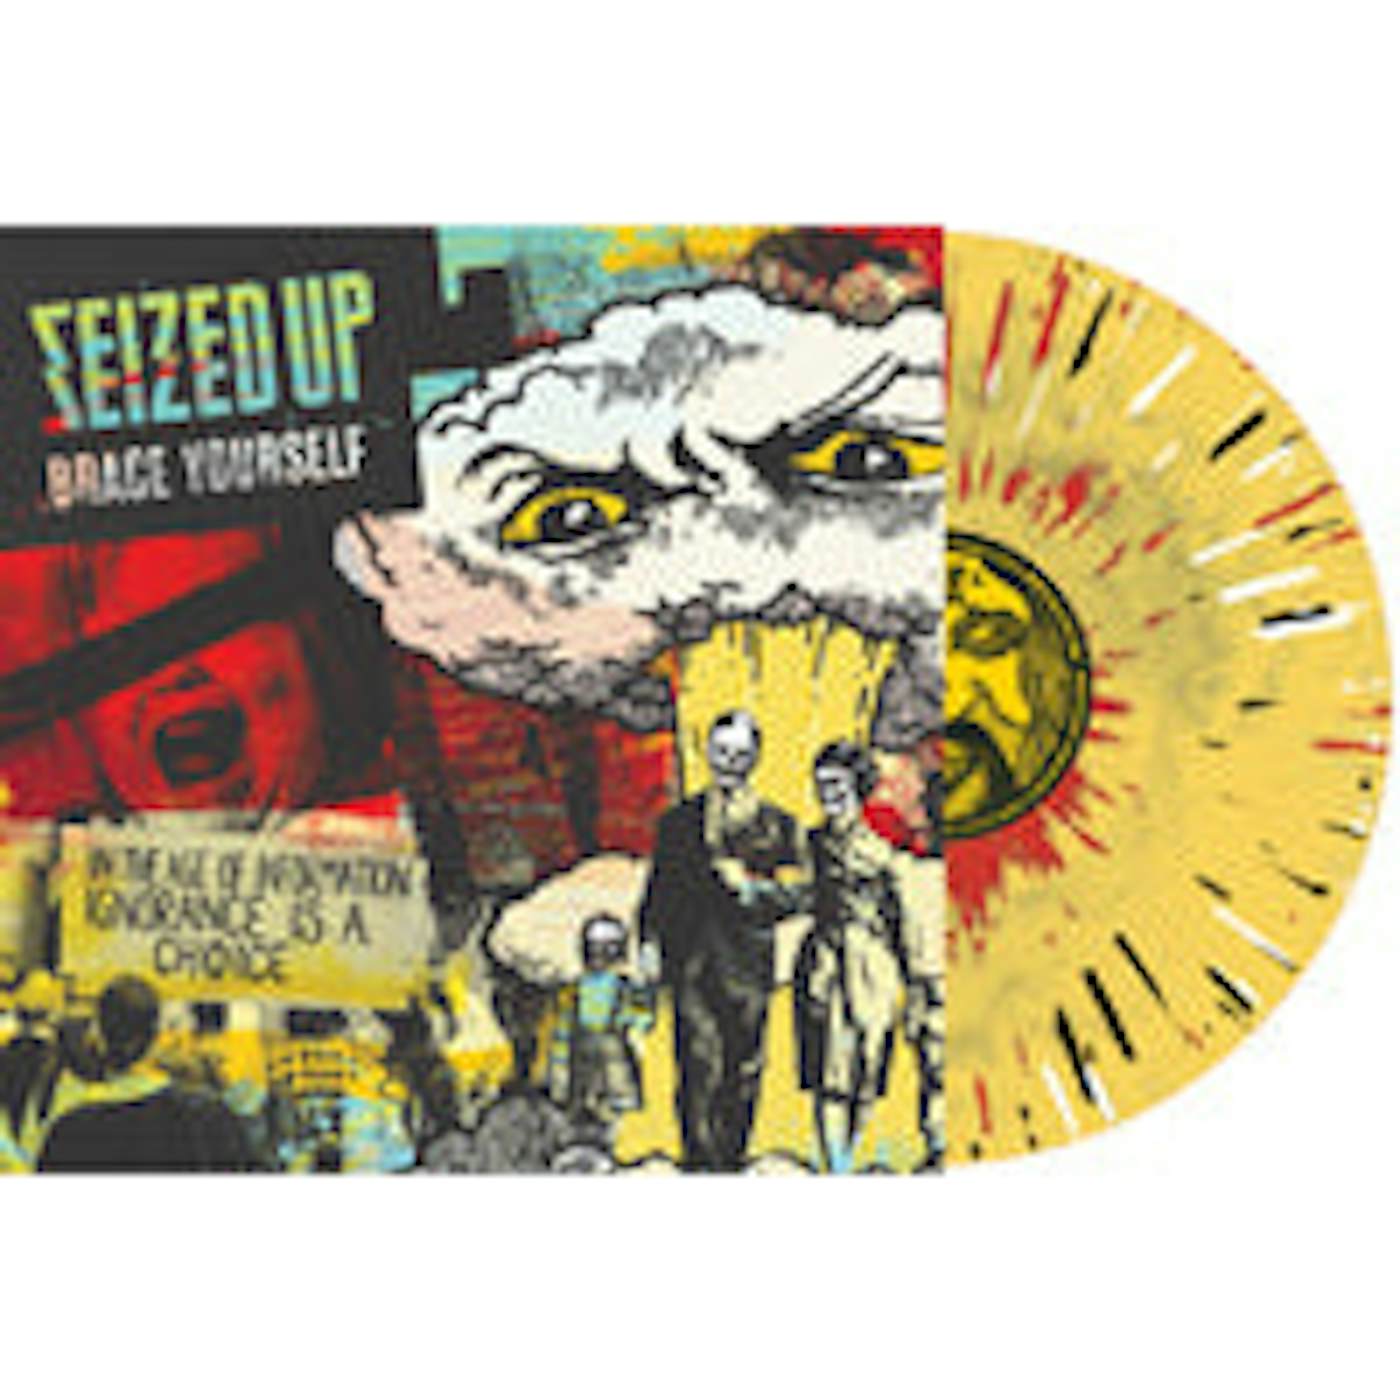 Seized Up LP - Brace Yourself (Mustard/Clear Splatter Vinyl)